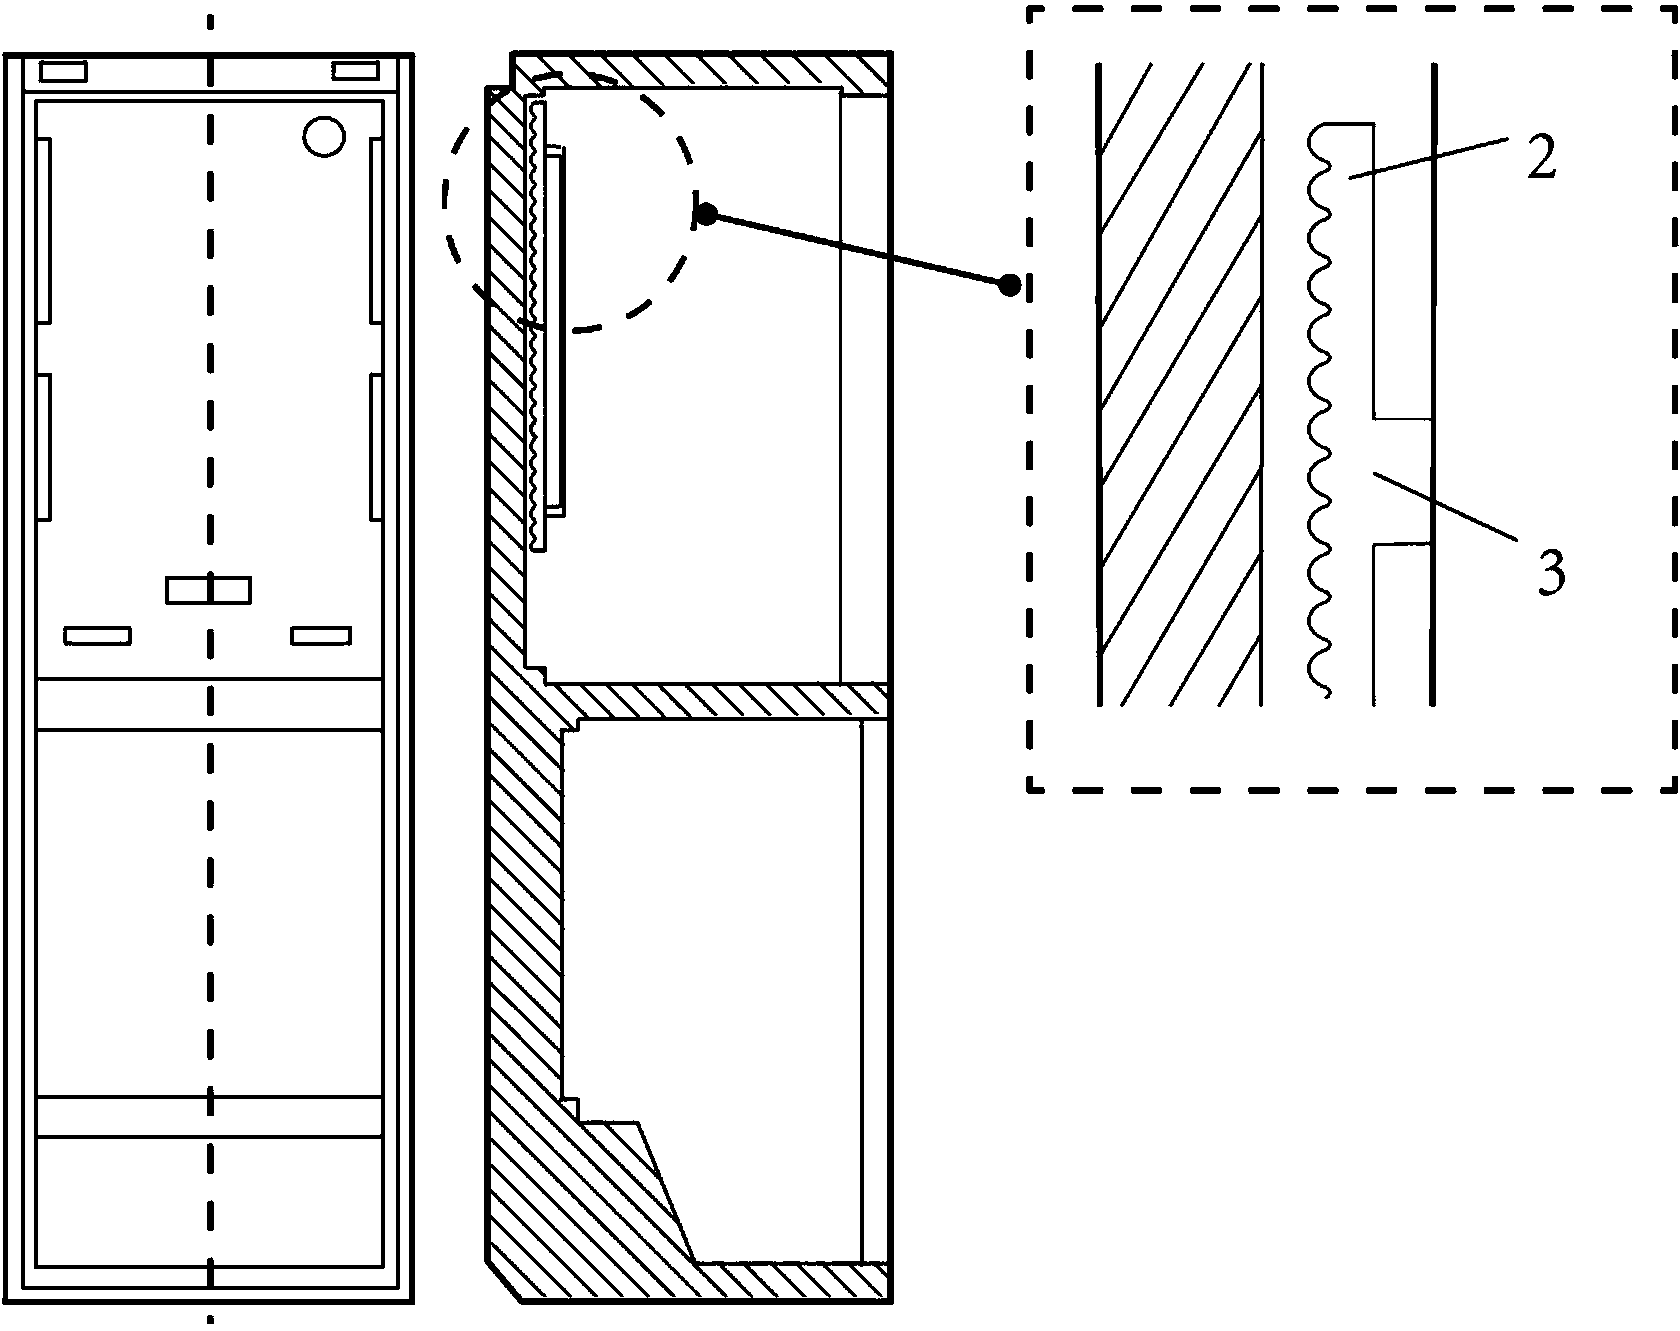 Adjusting type refrigerator rack mechanism